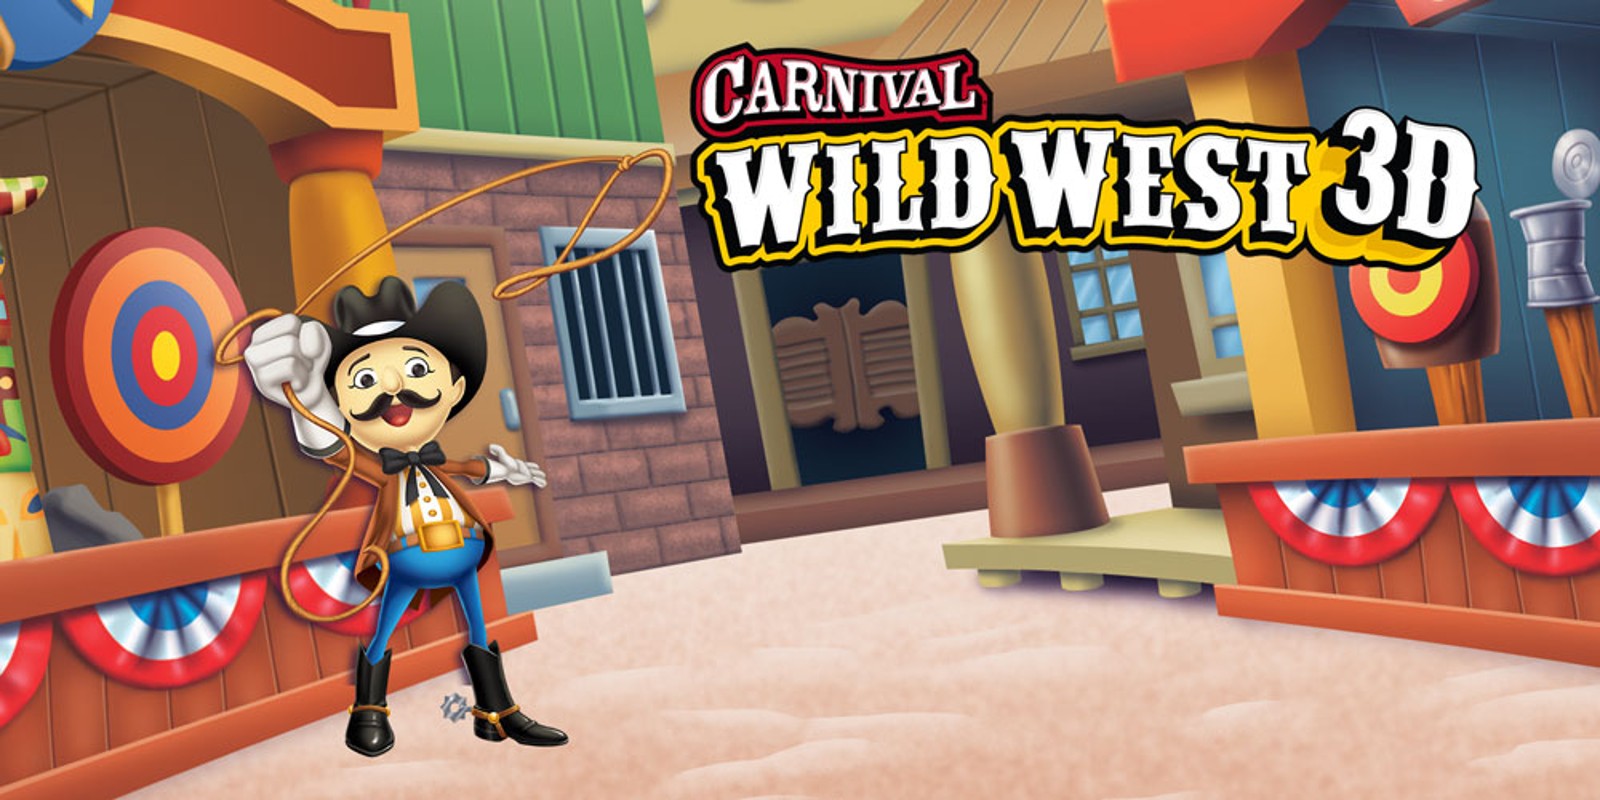 Carnival Wild West 3D